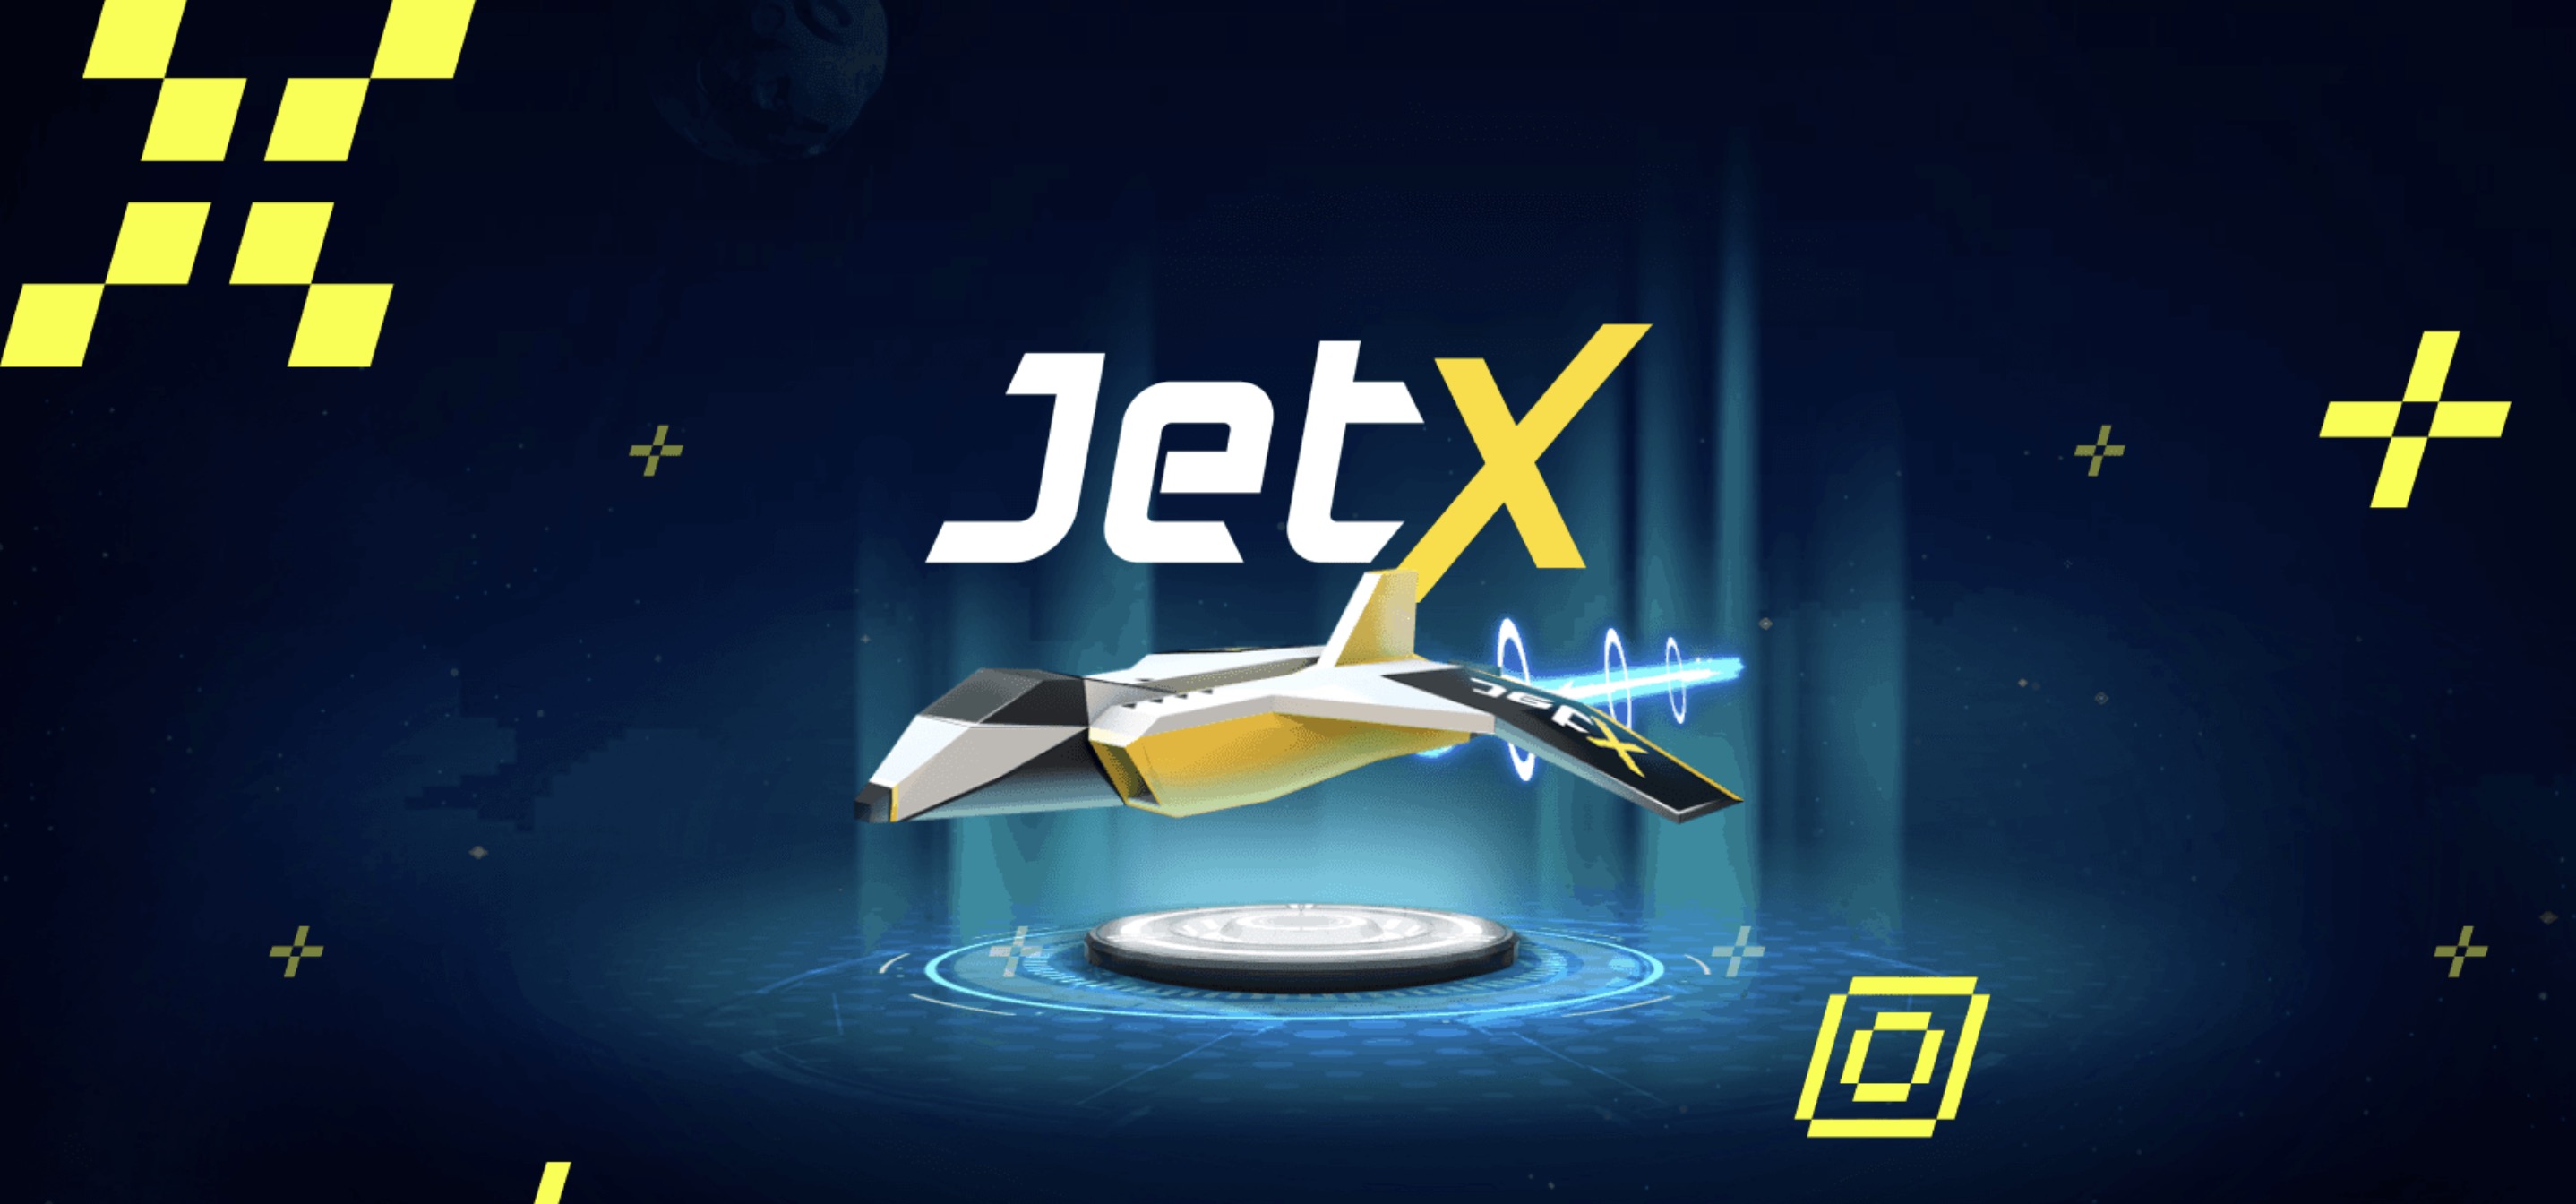      - Jet X